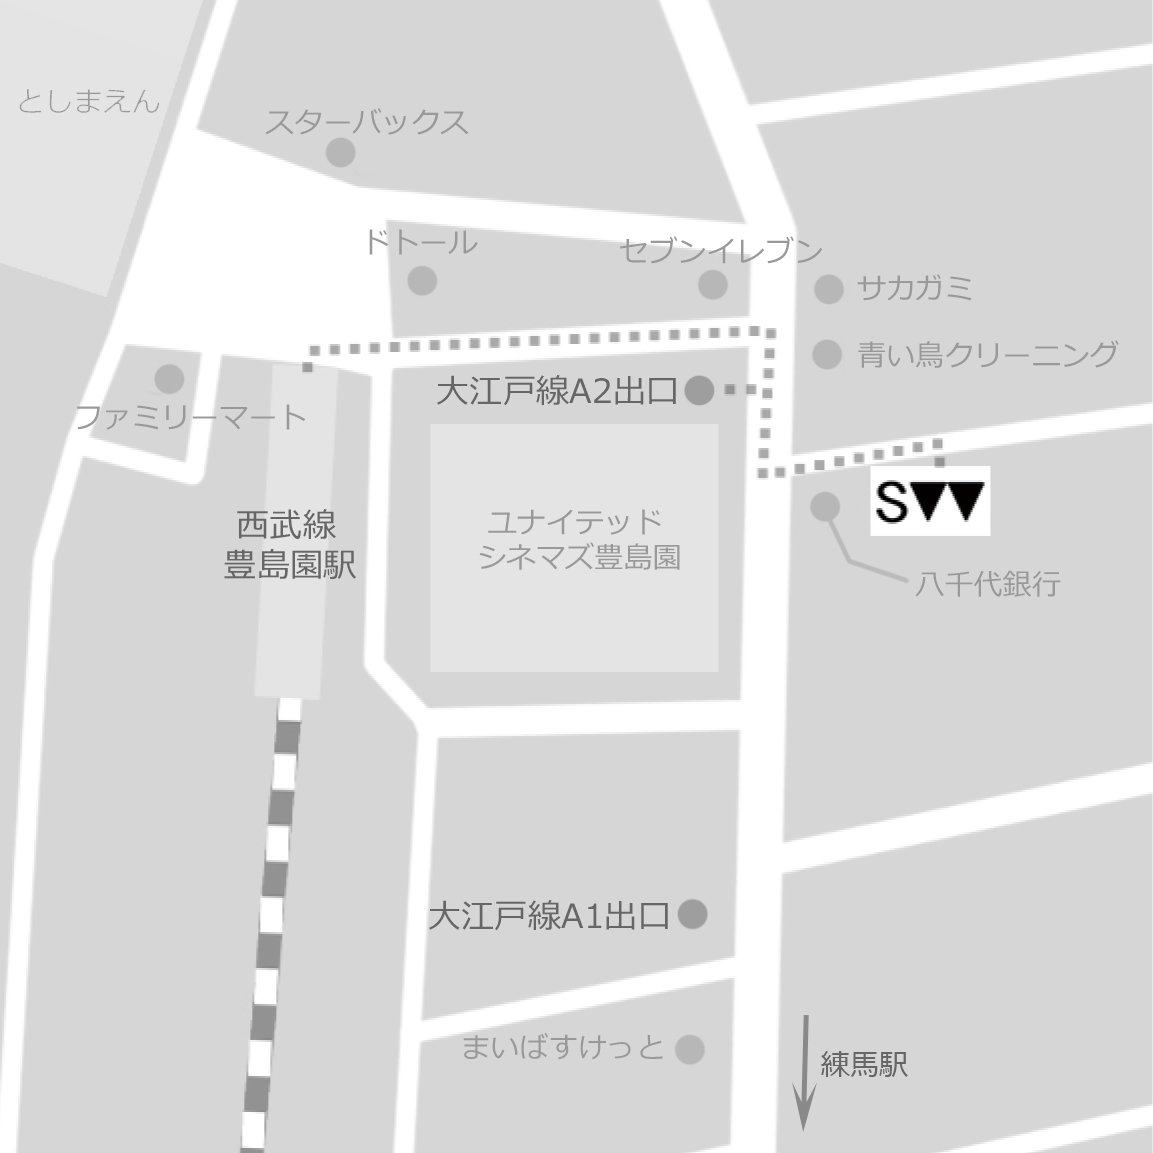 SW Map